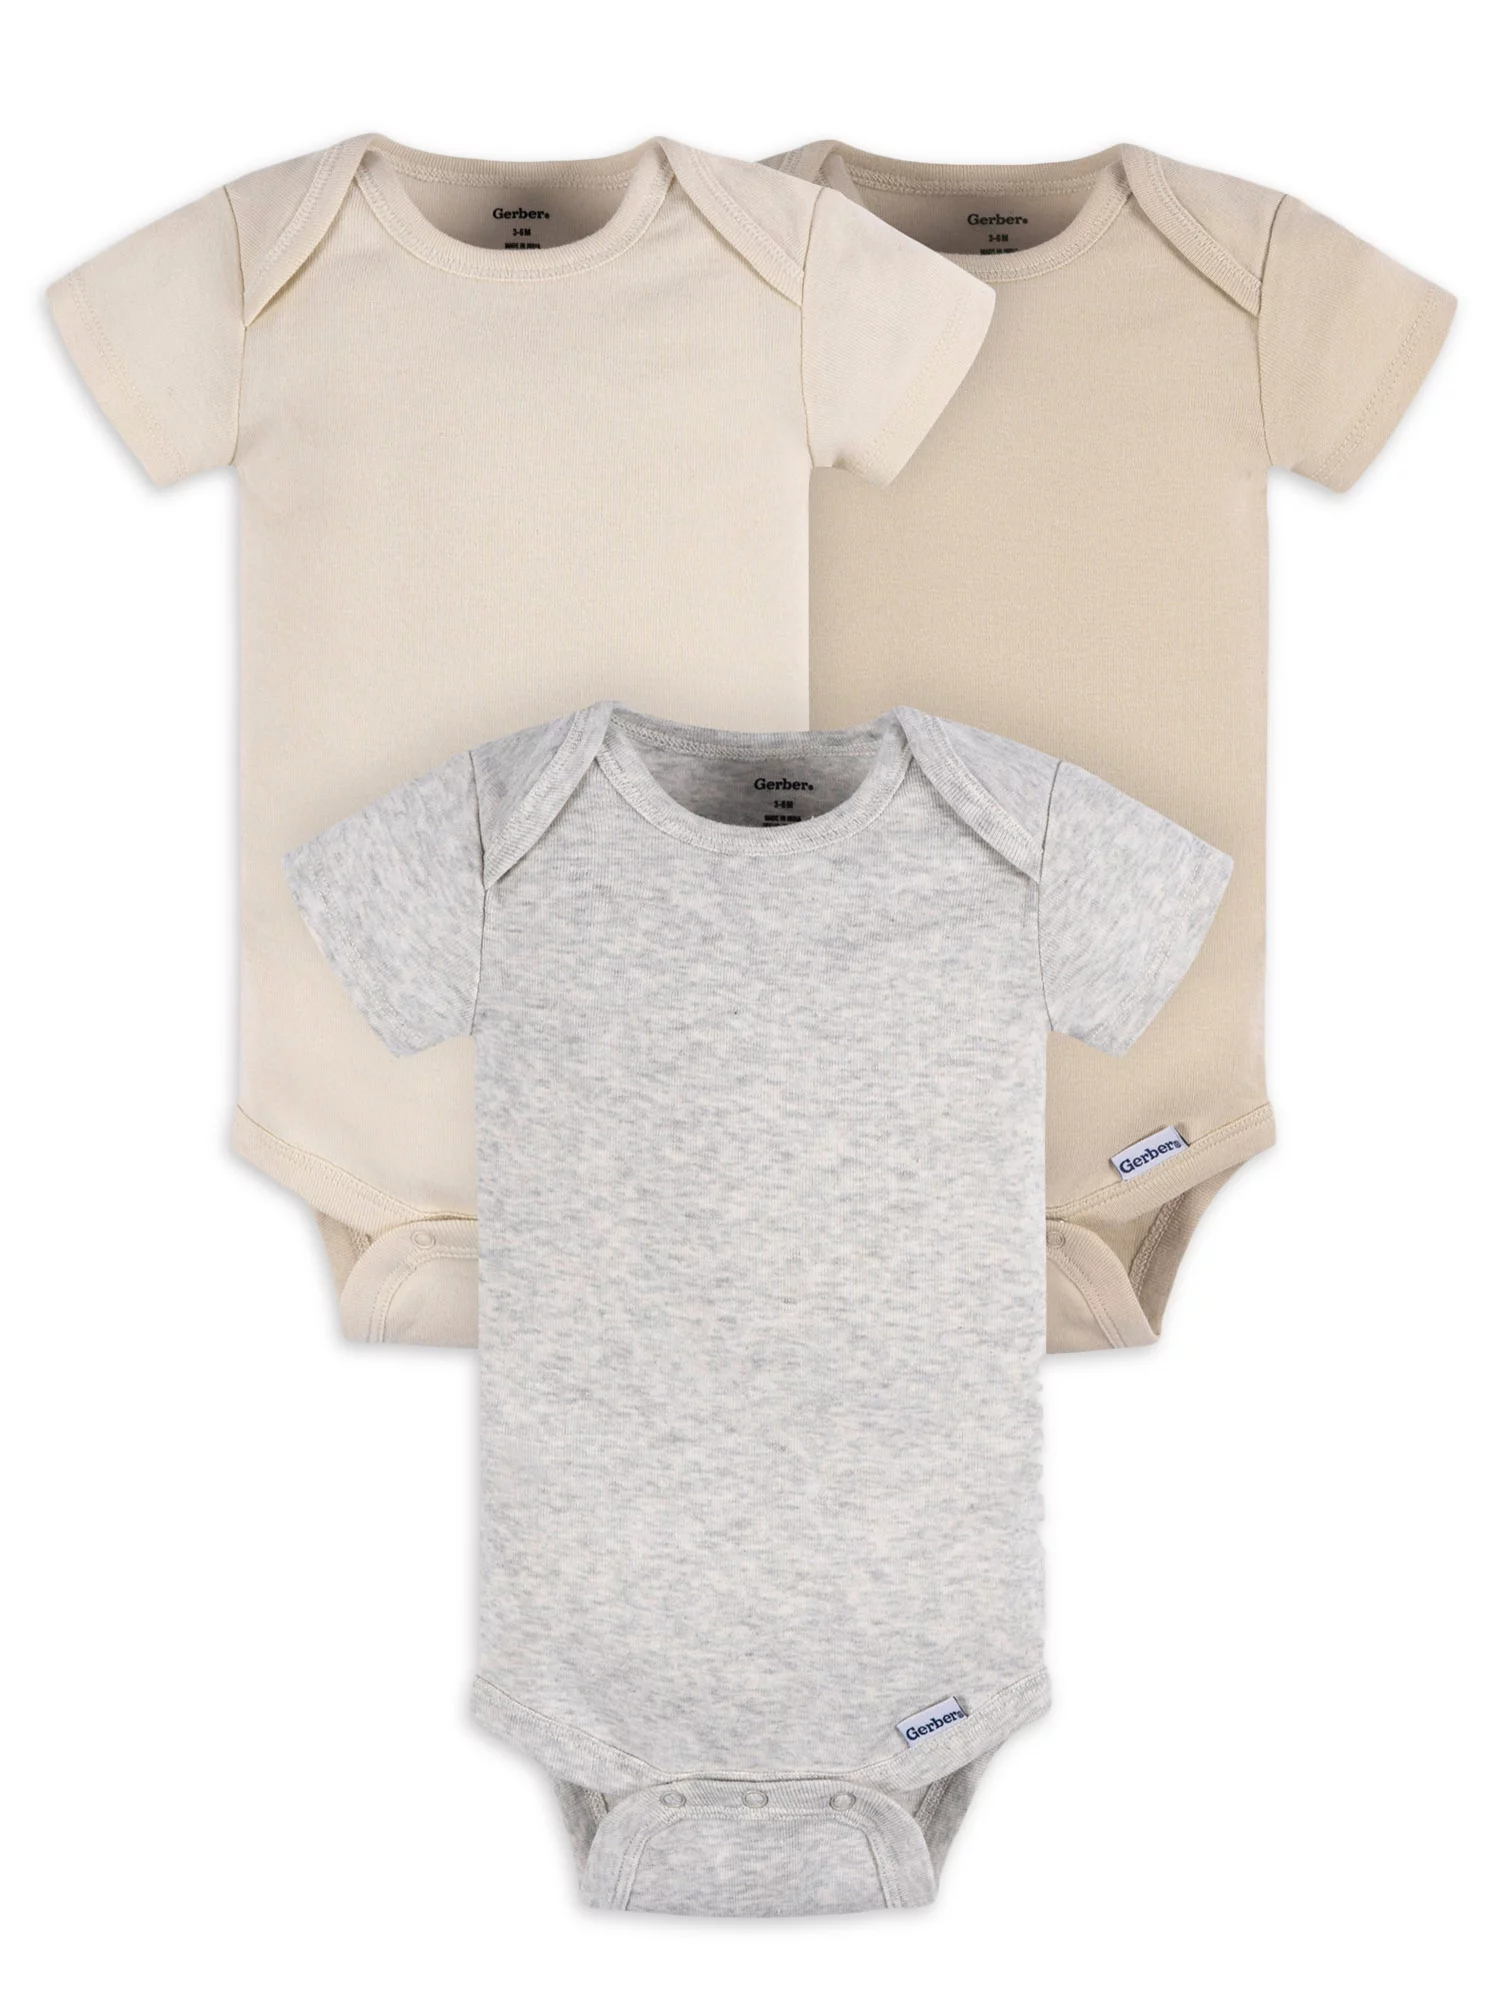 Gerber Baby Boy or Girl Unisex Casual Short Sleeve Bodysuits, 3-Pack, Sizes Preemie - 24 Months